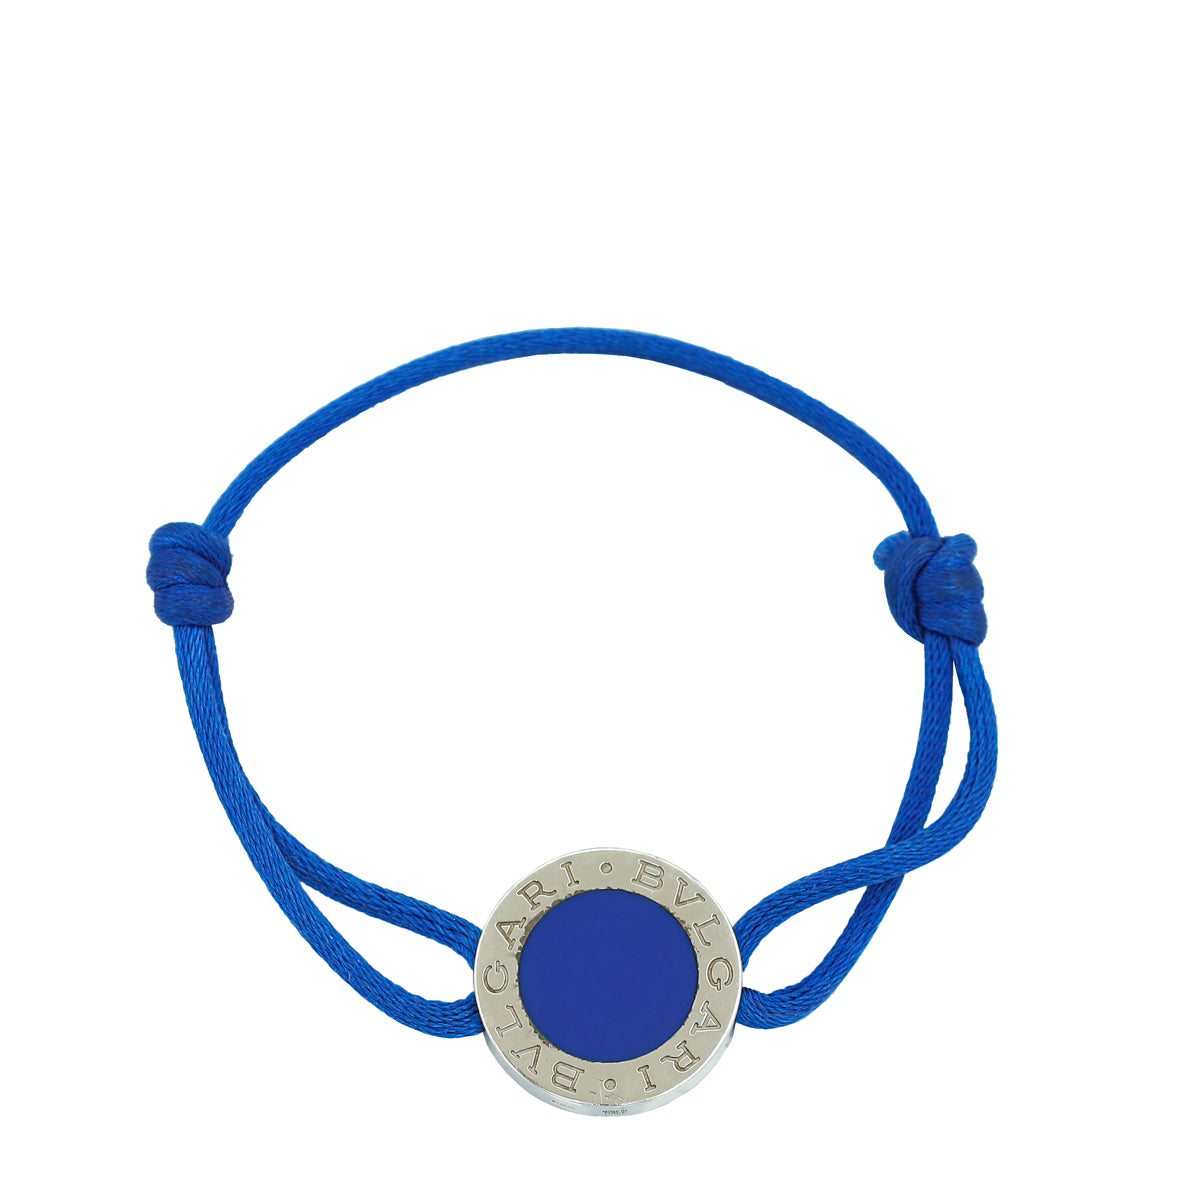 Calfskin Monogram Bracelet Black – Loom & Magpie Boutique